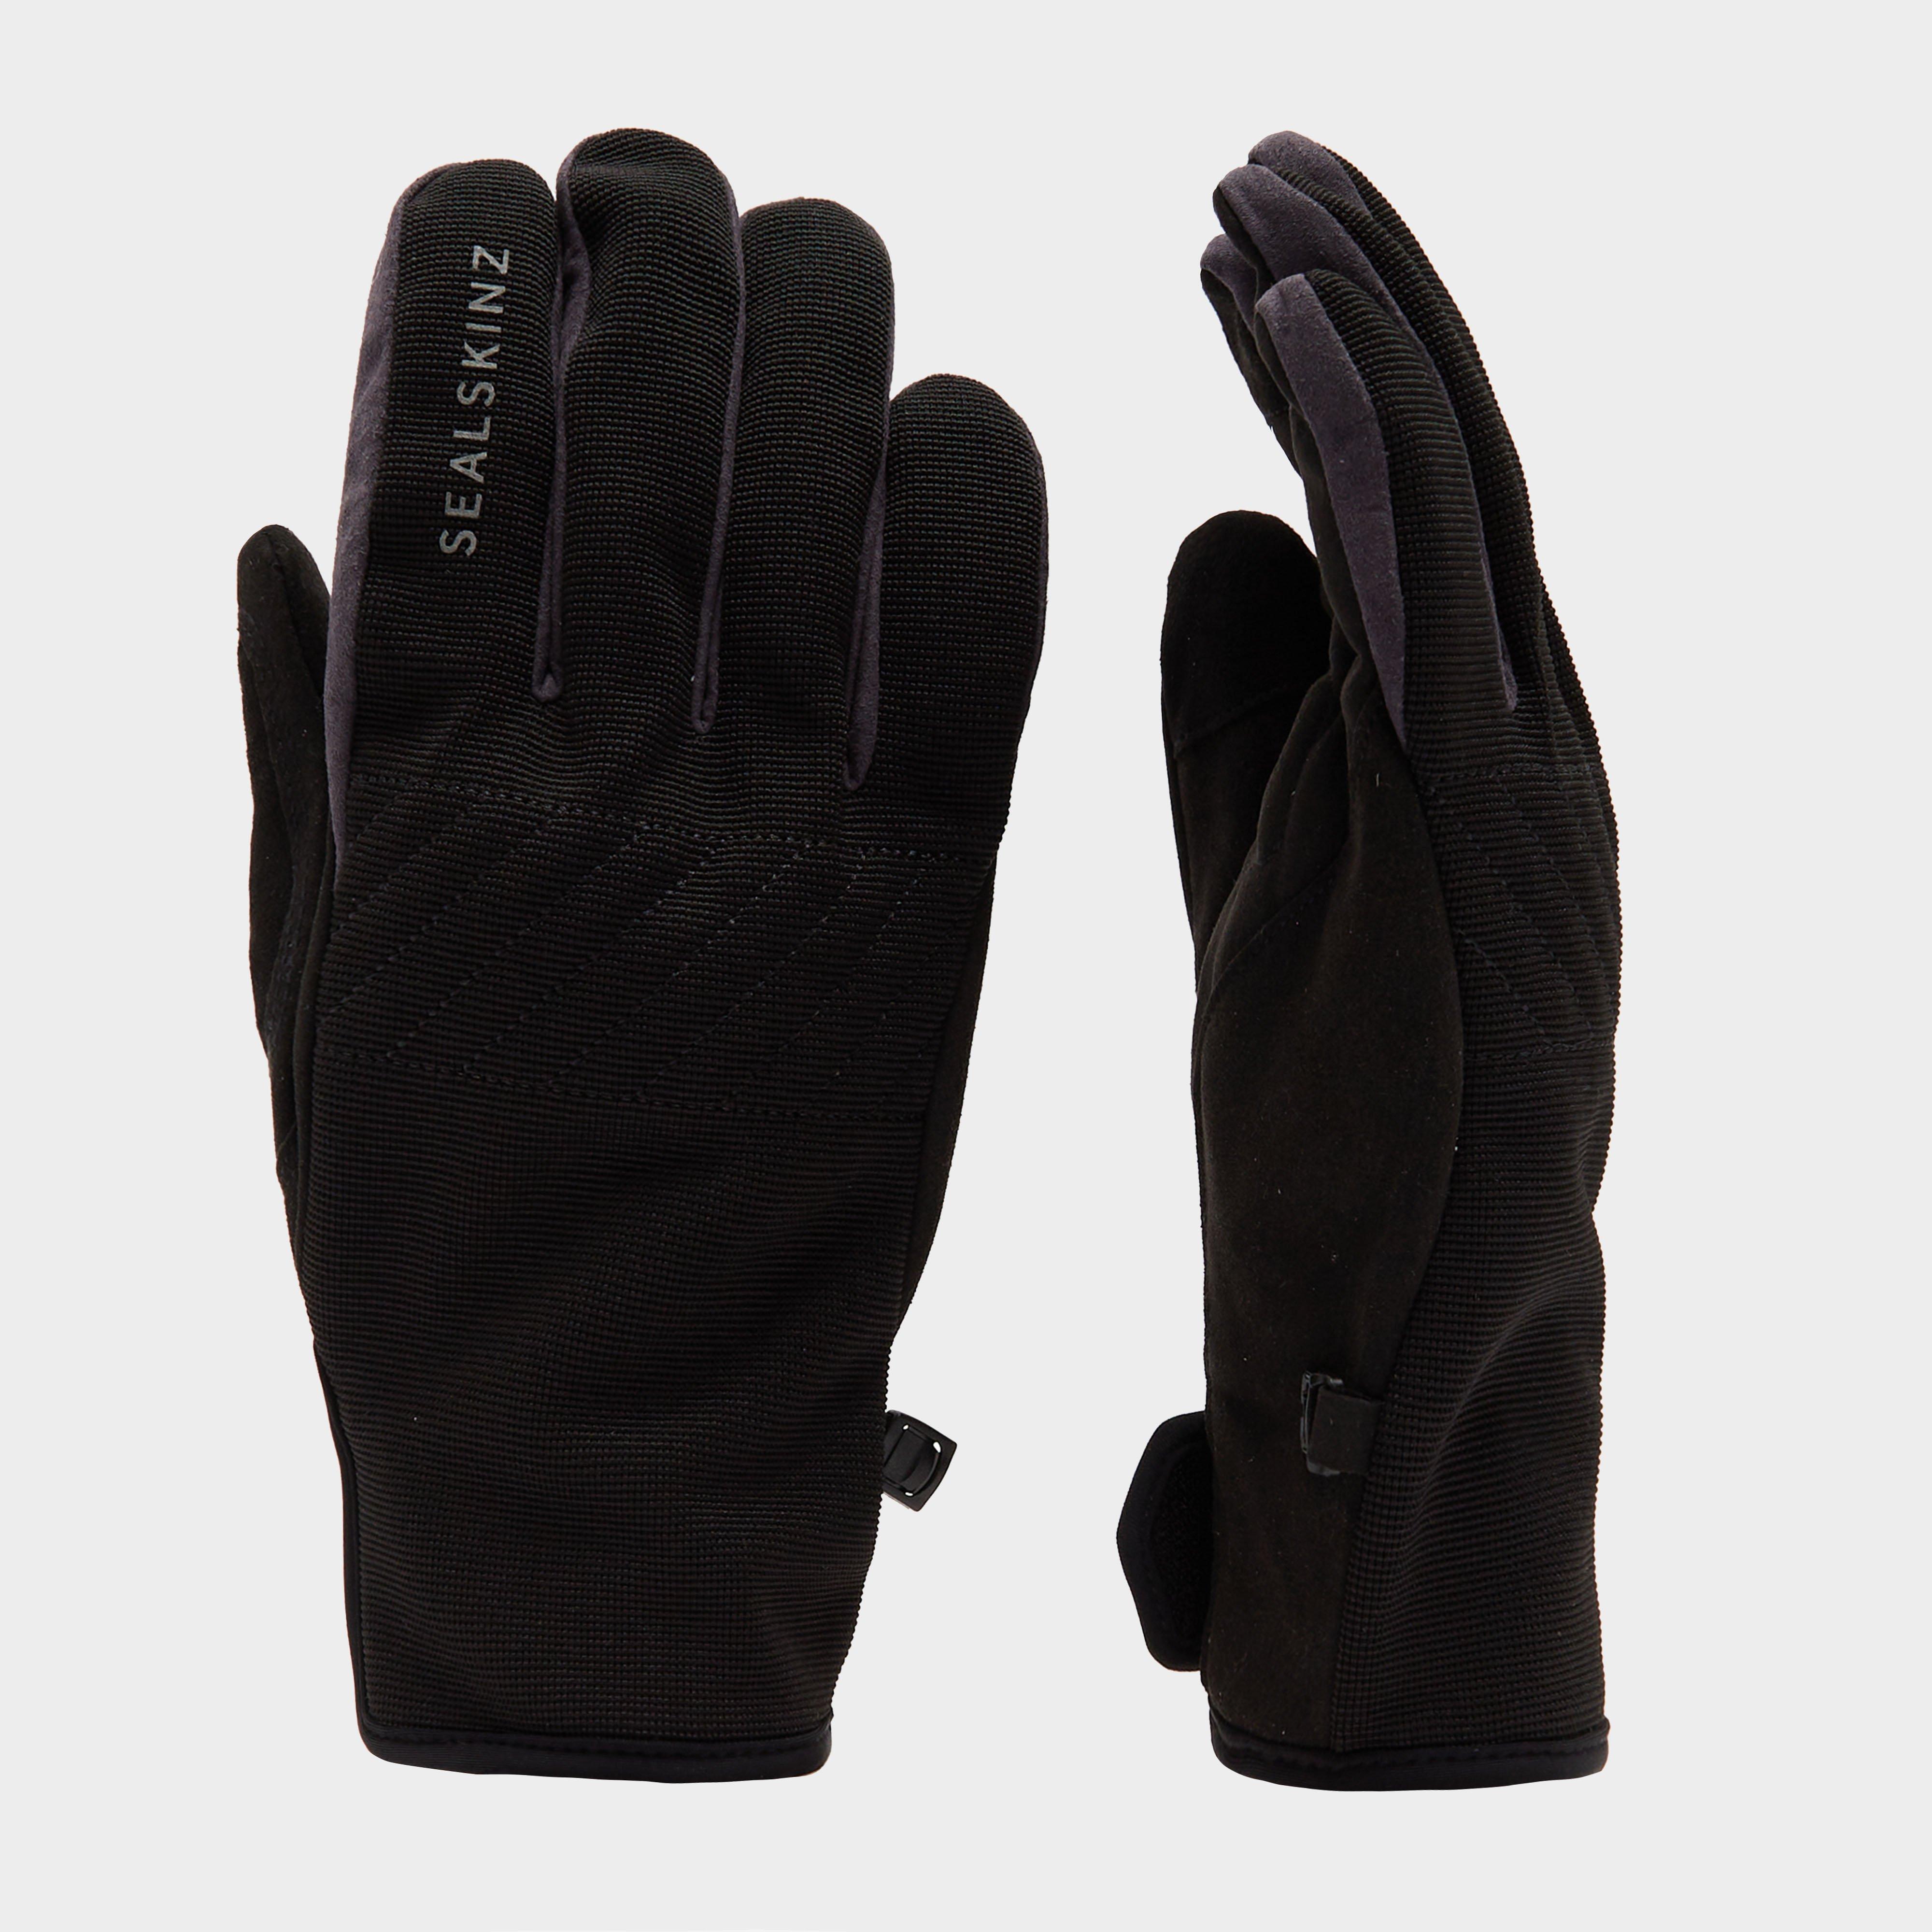  Sealskinz Multi Activity Glove, Black